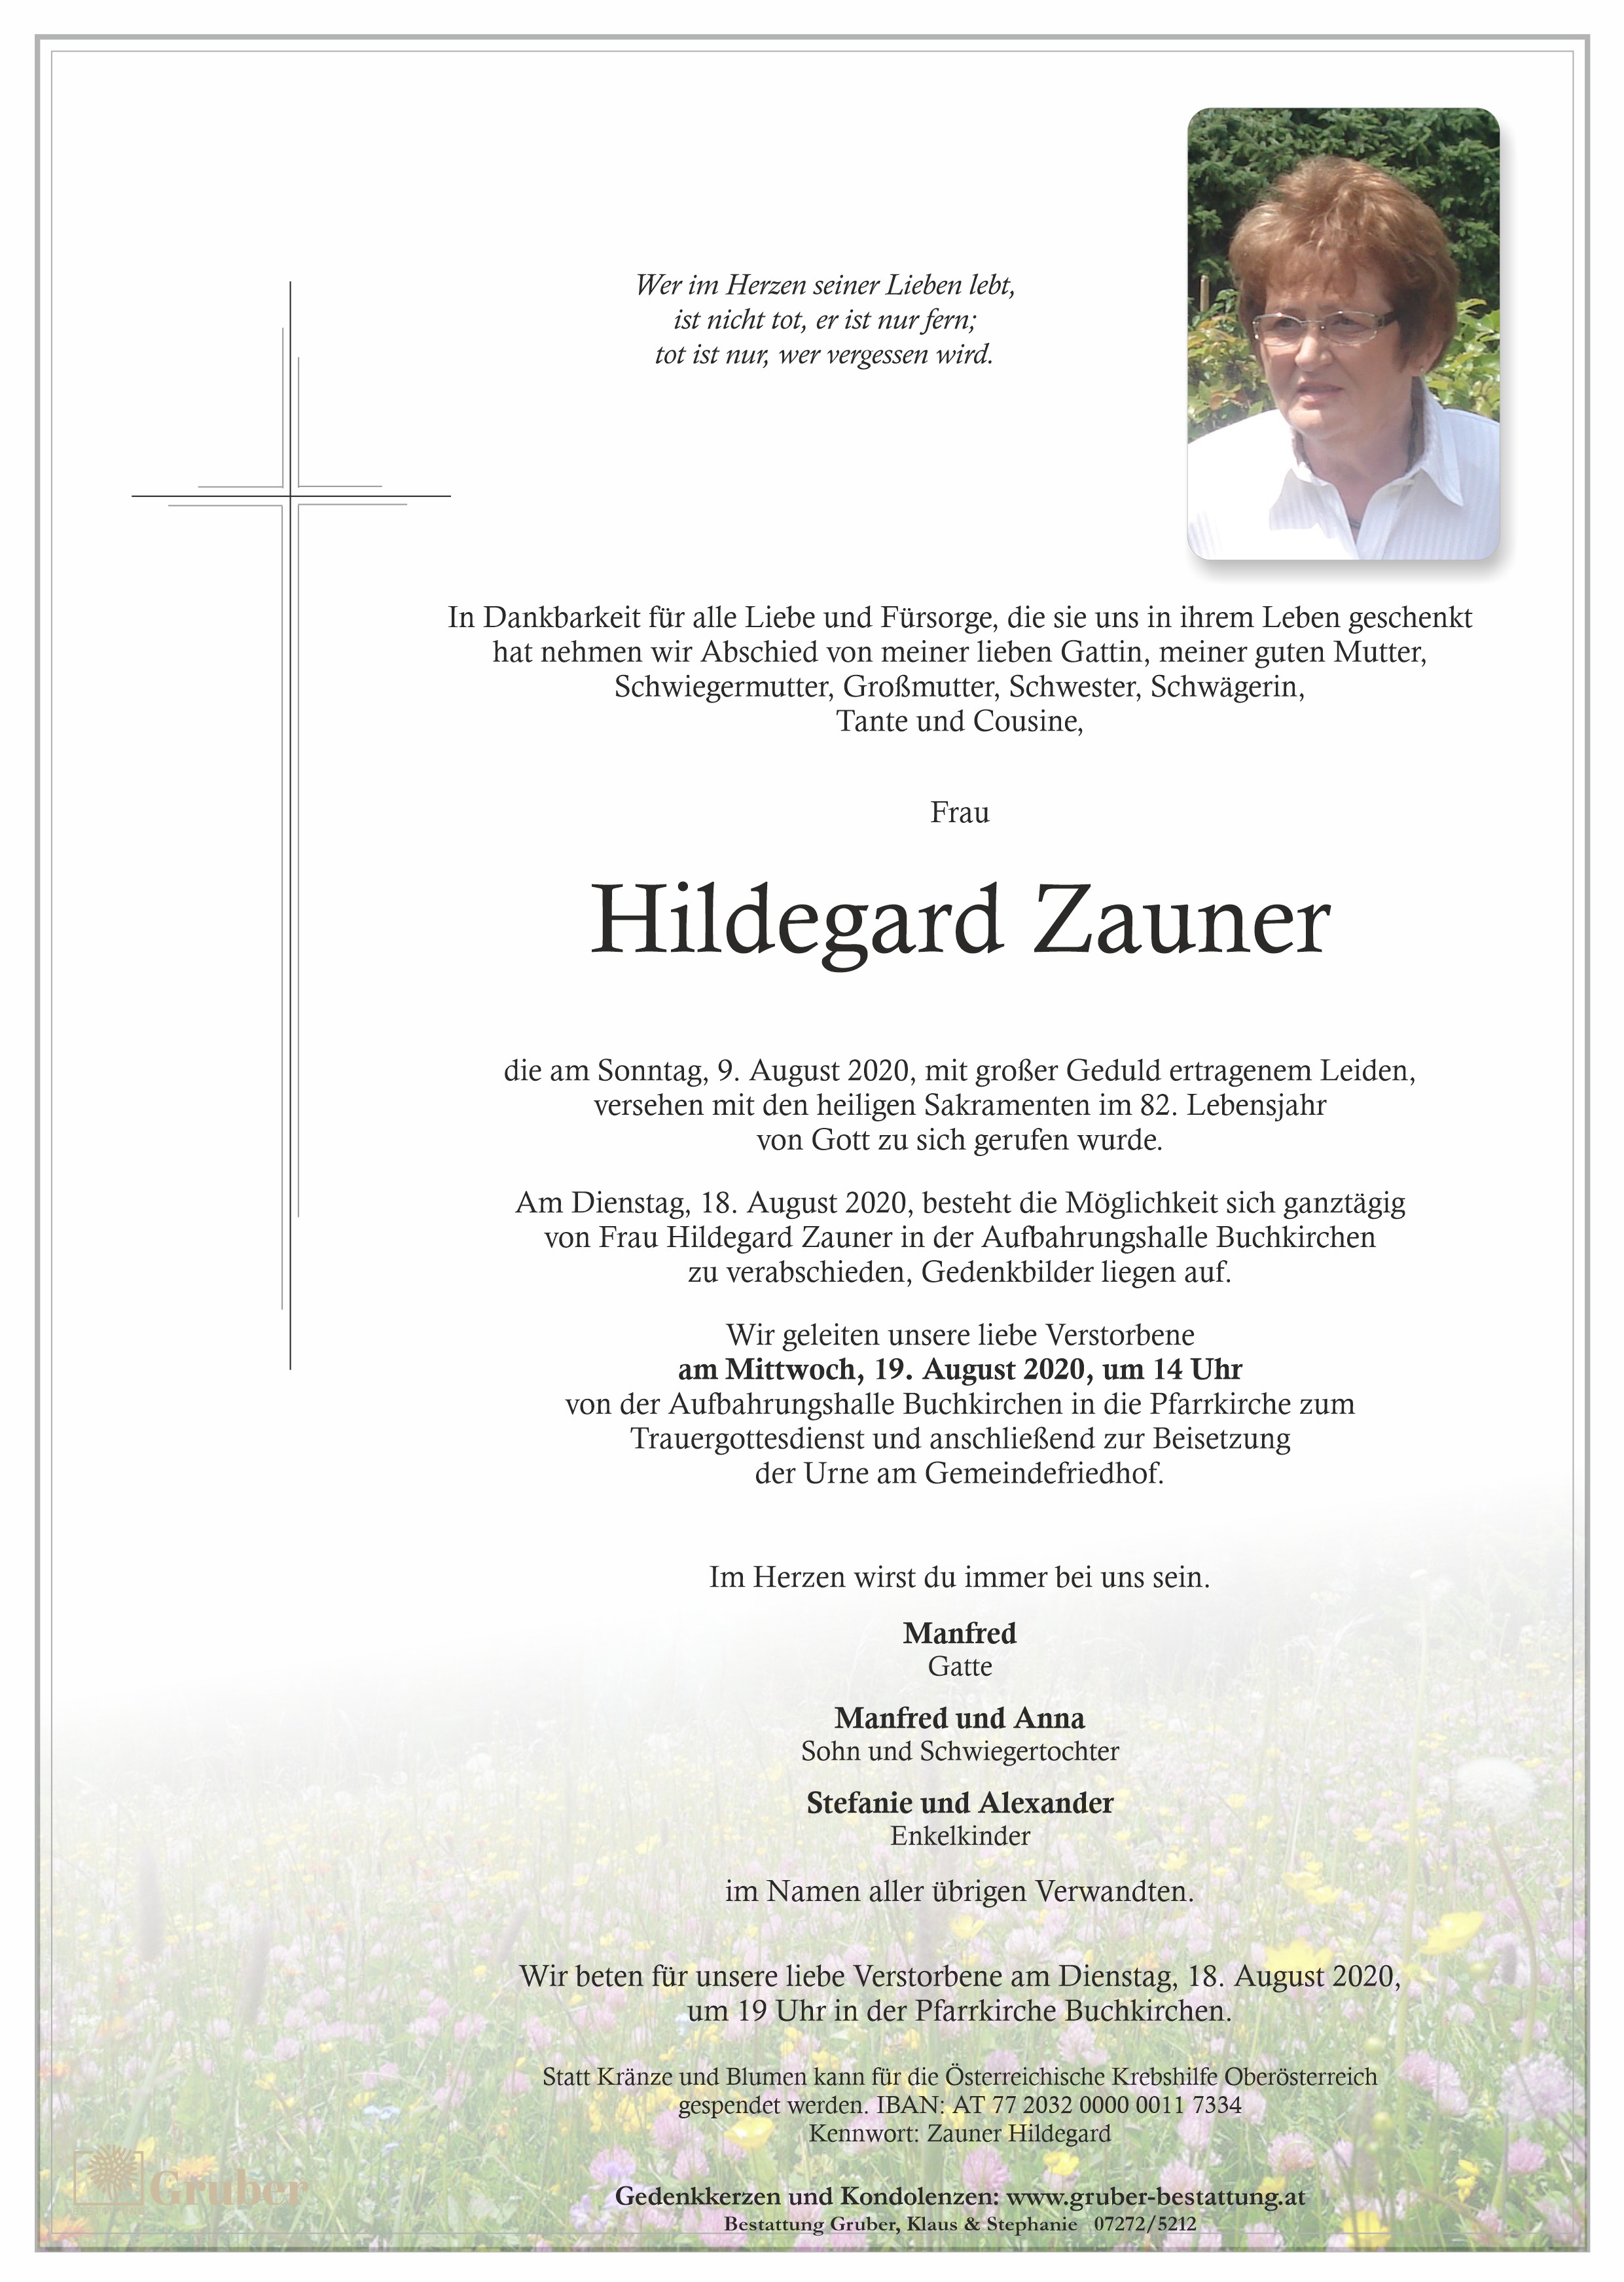 Hildegard Zauner (Wels)